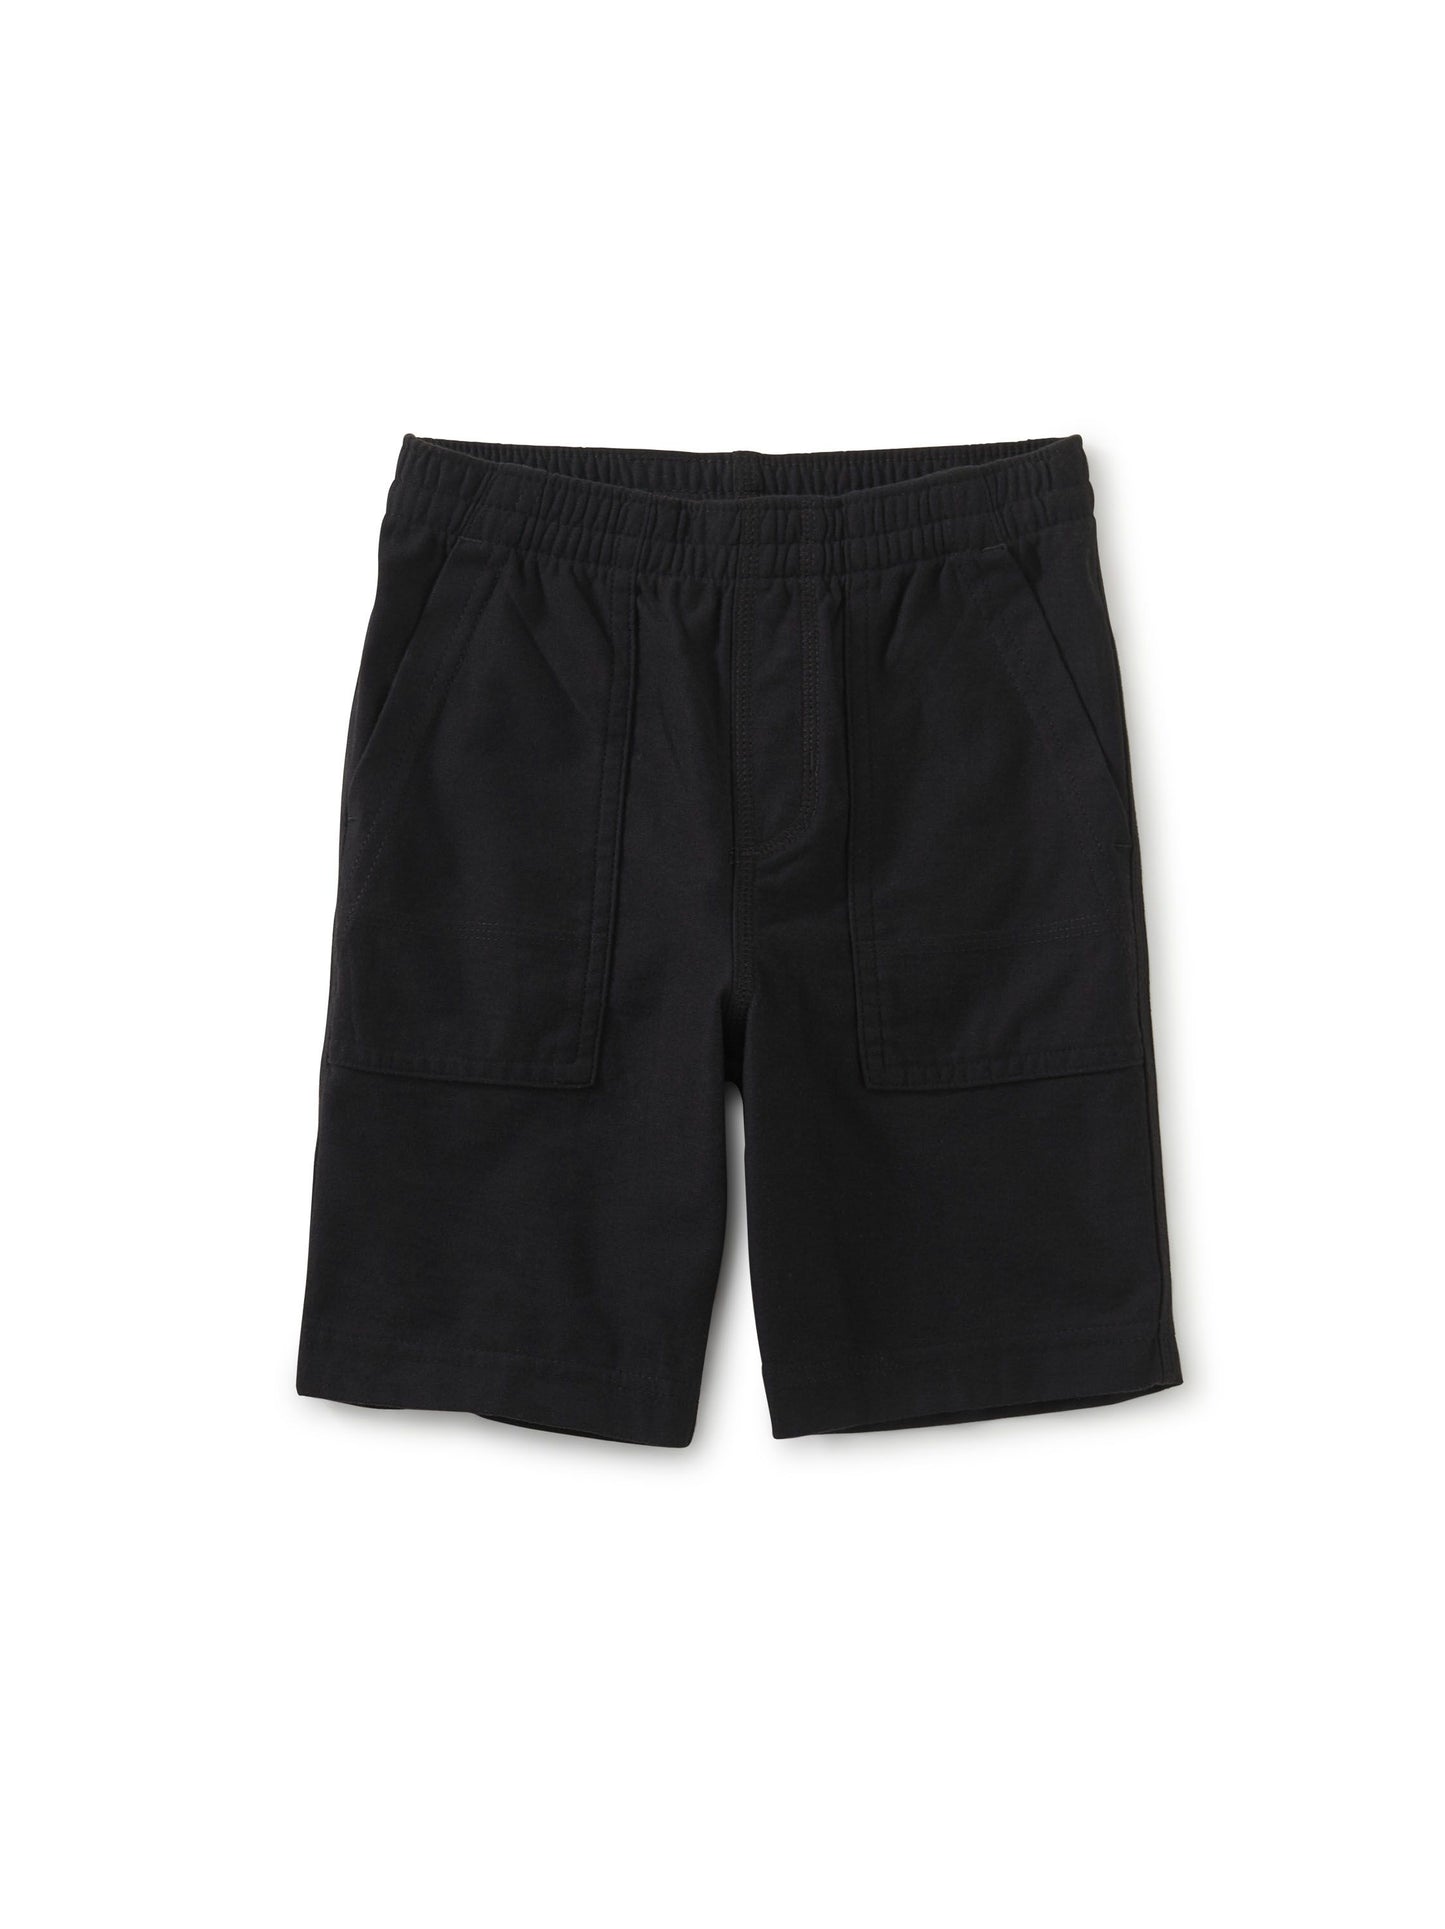 Playwear Shorts - Jet Black